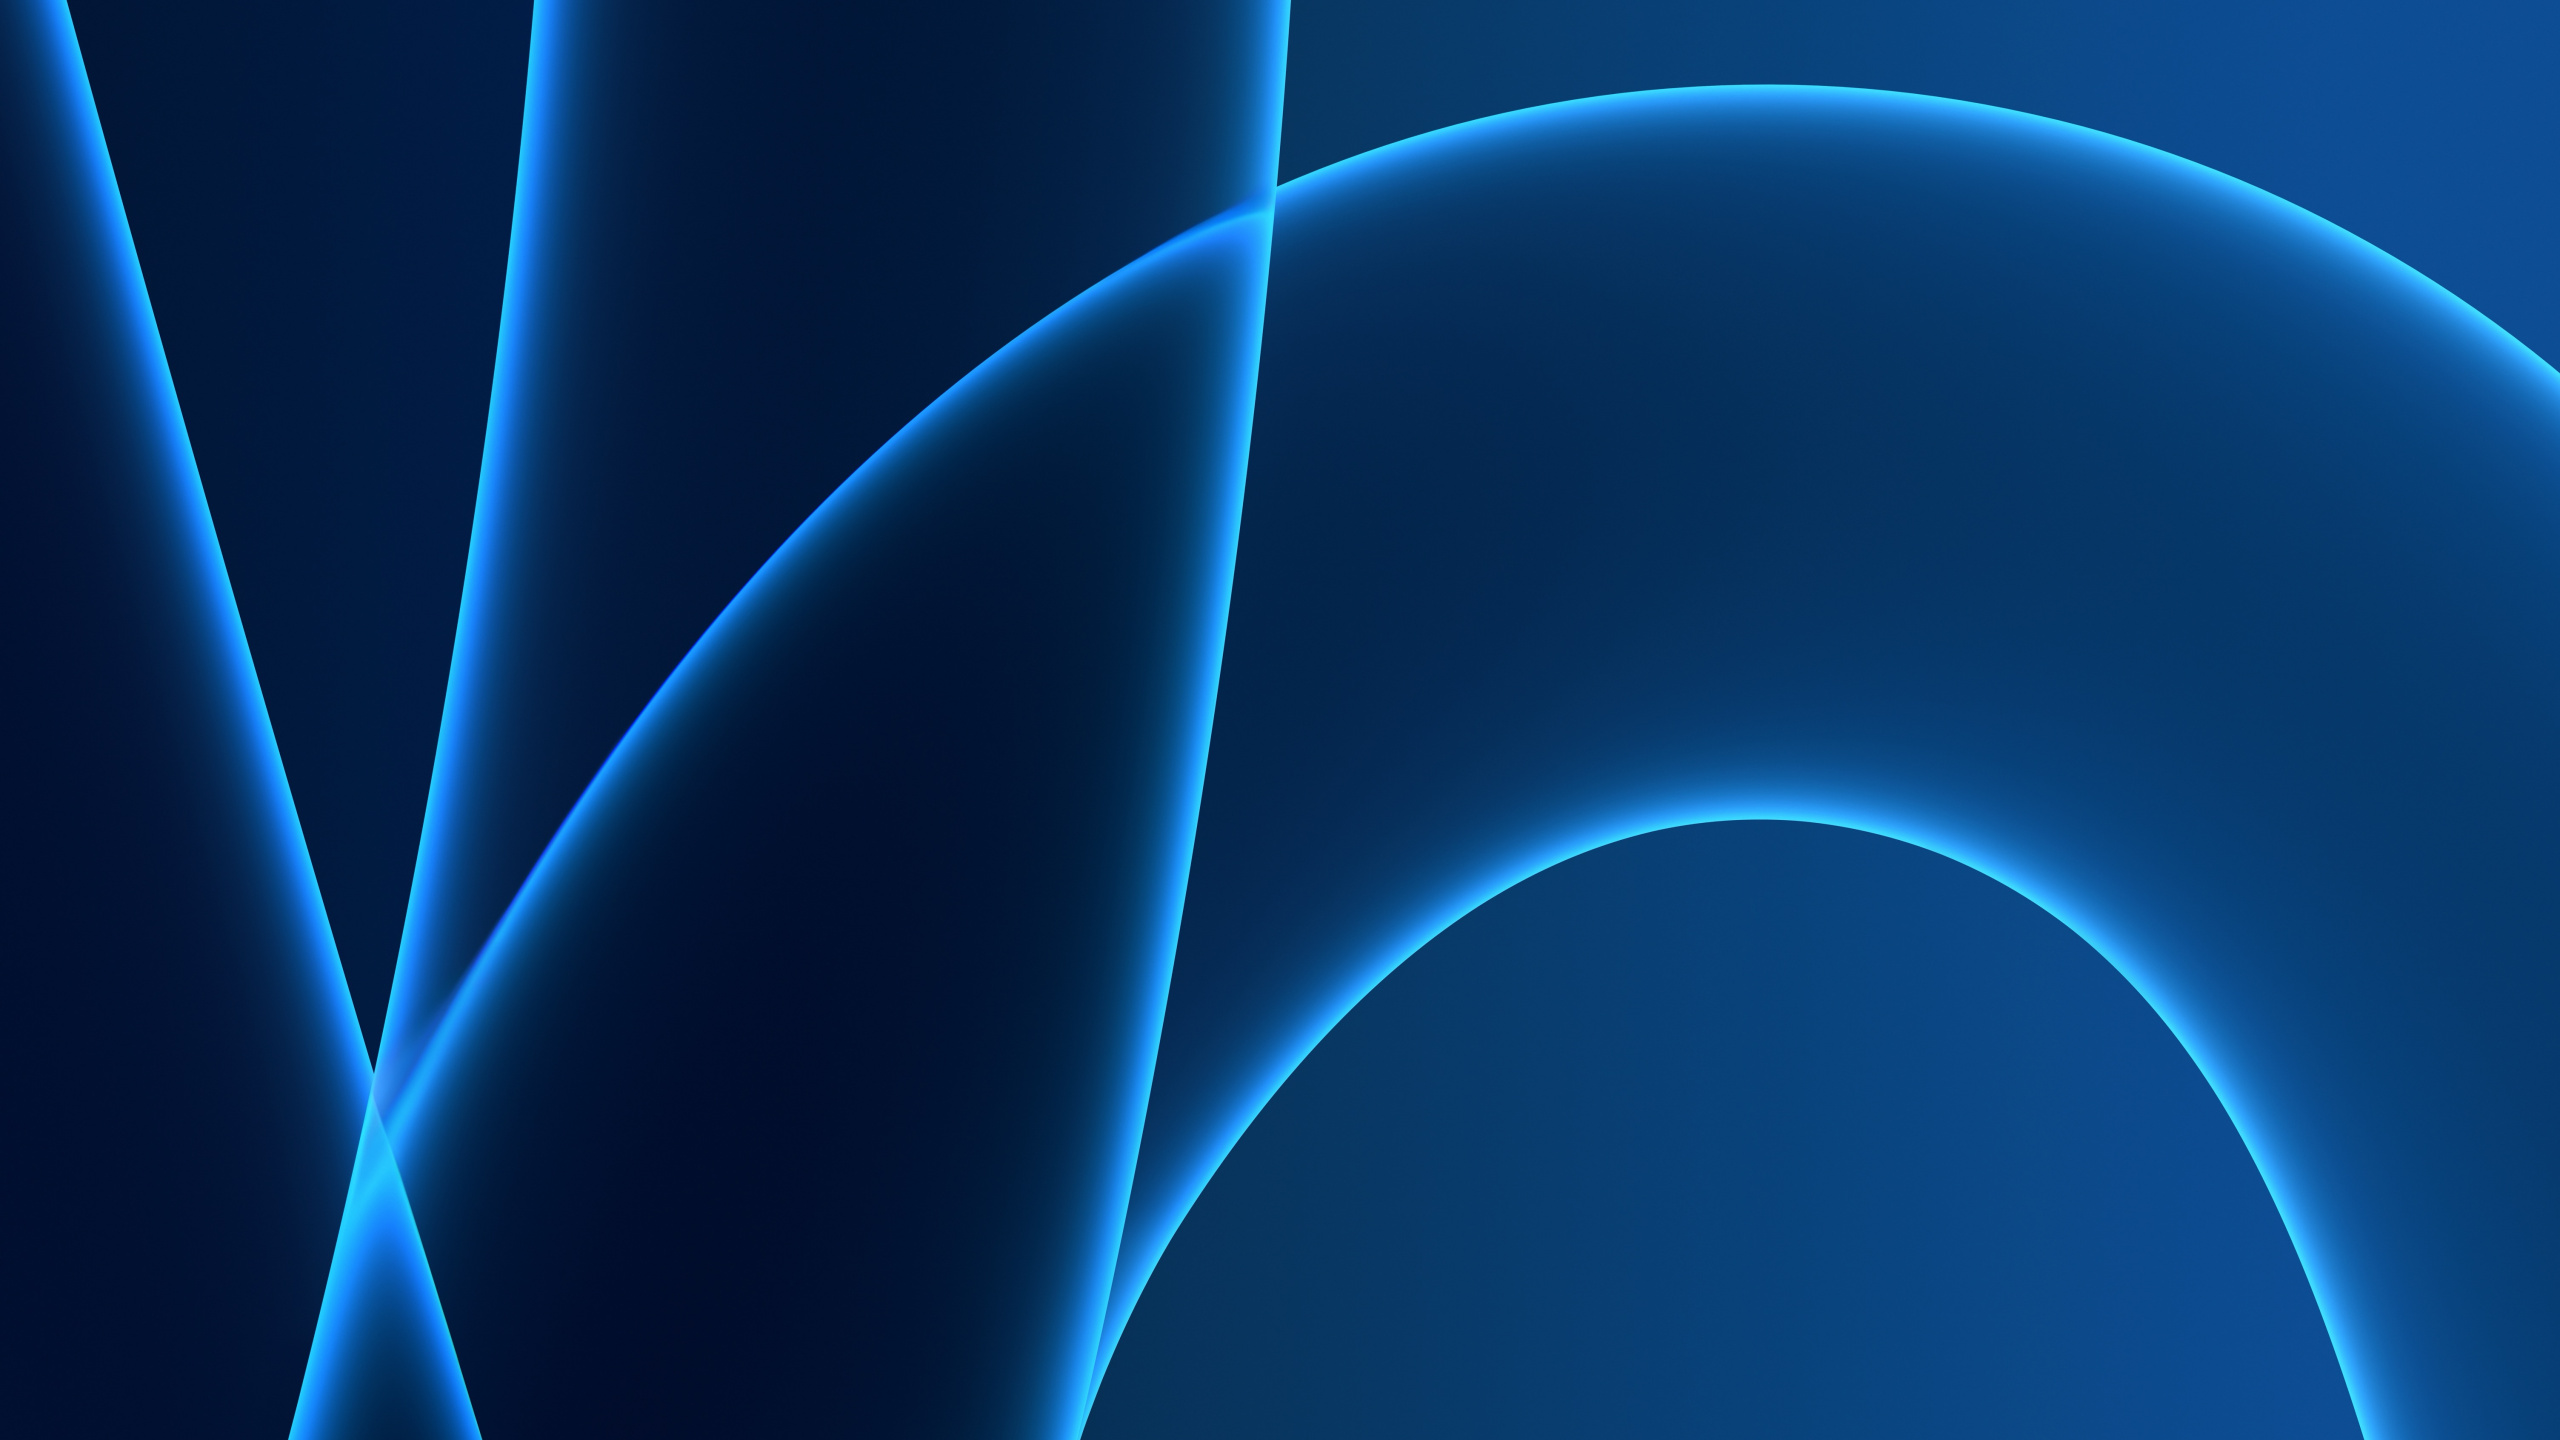 Dark Blue IMac Color Matching Wallpaper for IPad or Desktop. Wallpaper in 2560x1440 Resolution